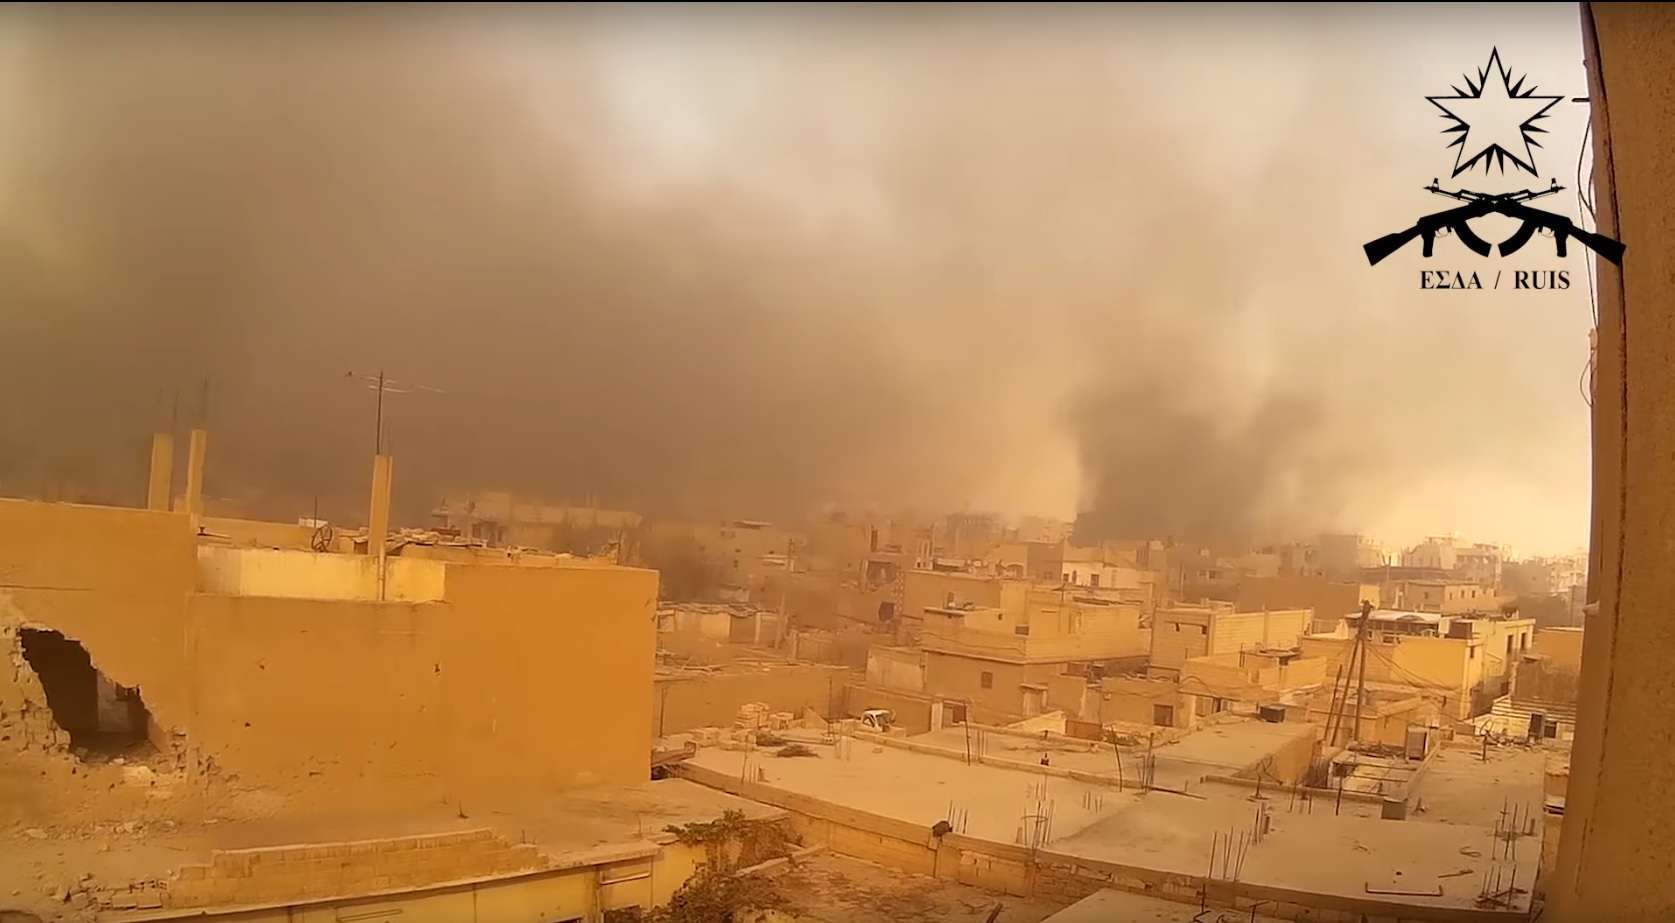 RUIS combatants fight within IFB in Raqqa